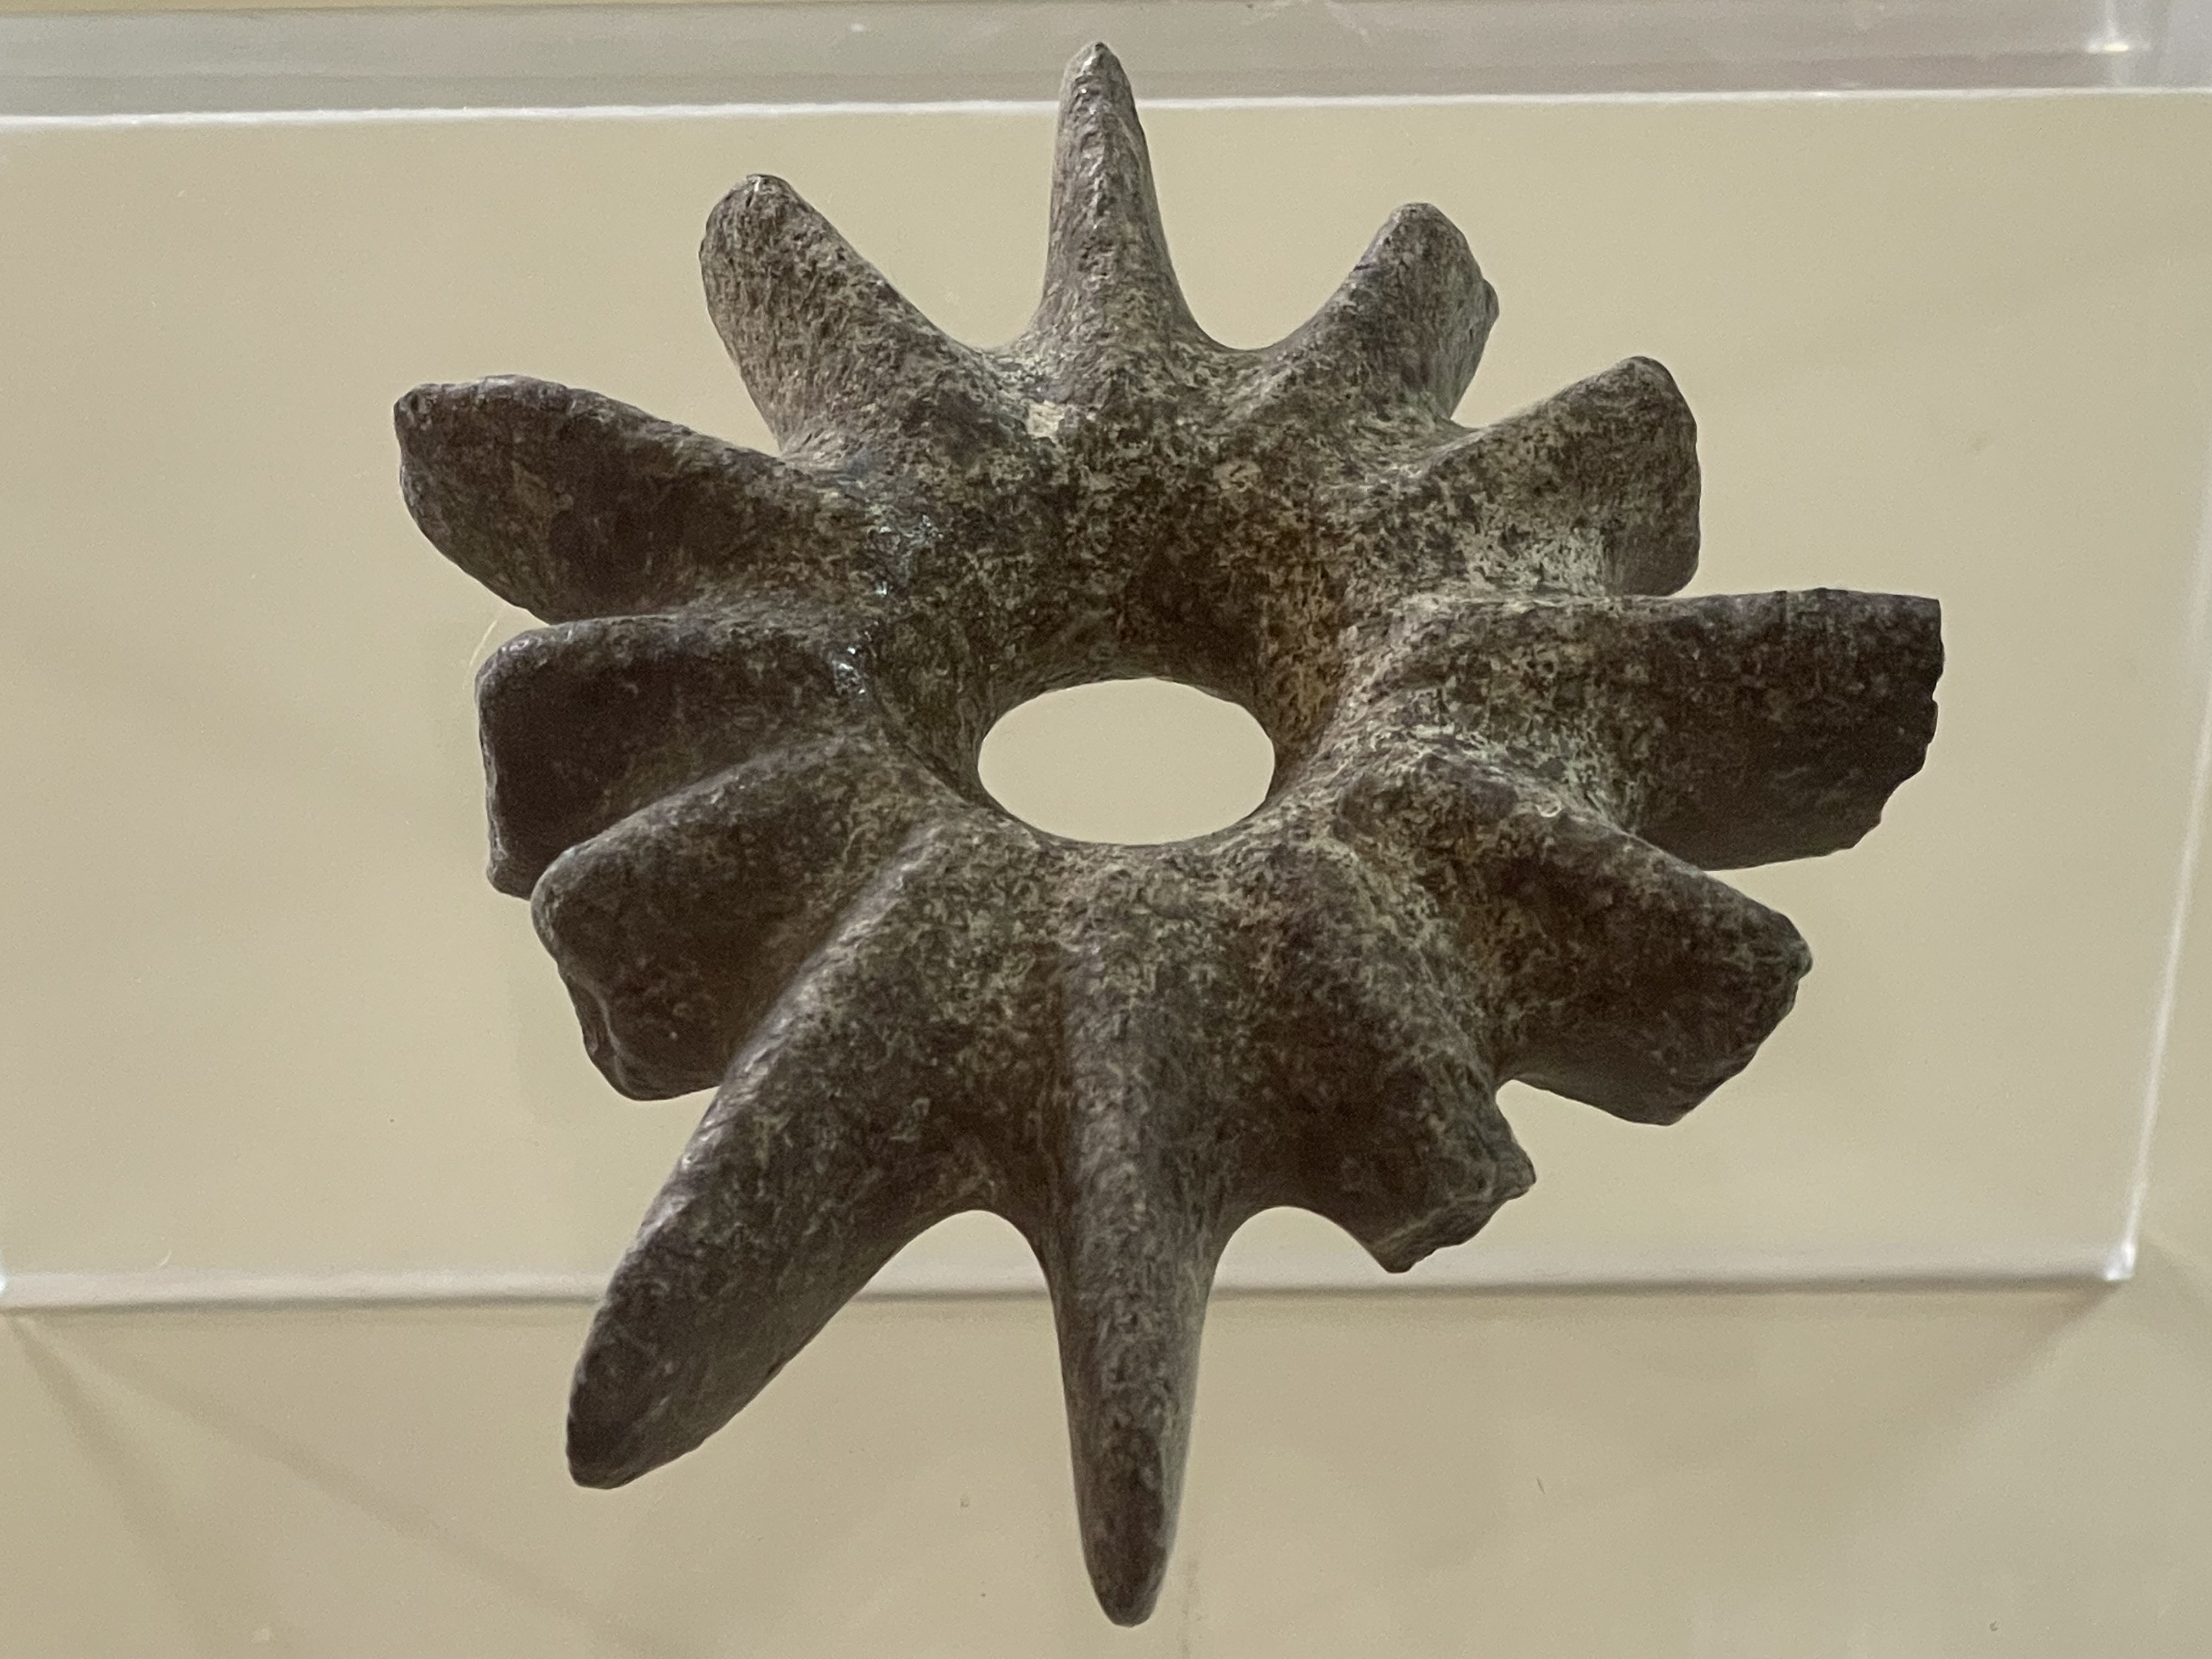 Star shaped stone tool